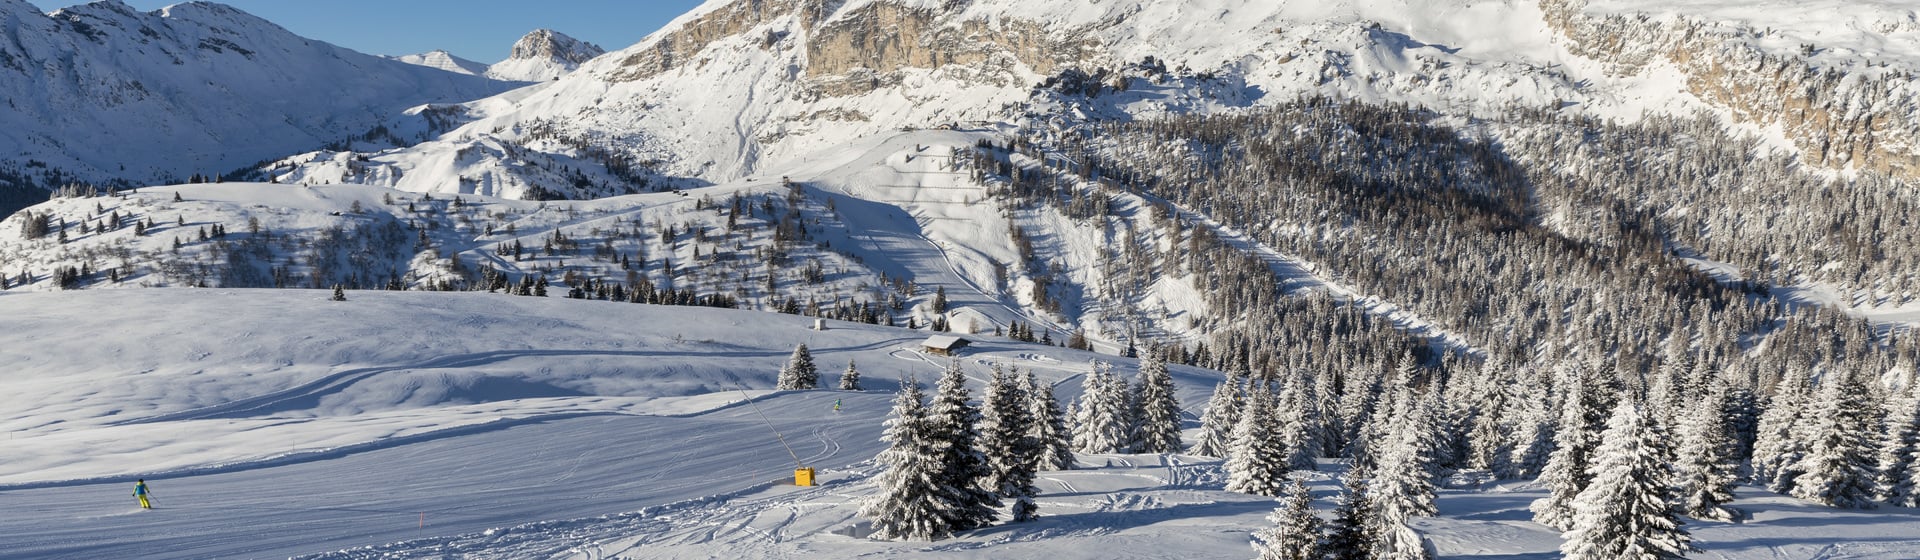 Winterurlaub 2020-21 in den Arabba-Dolomiten